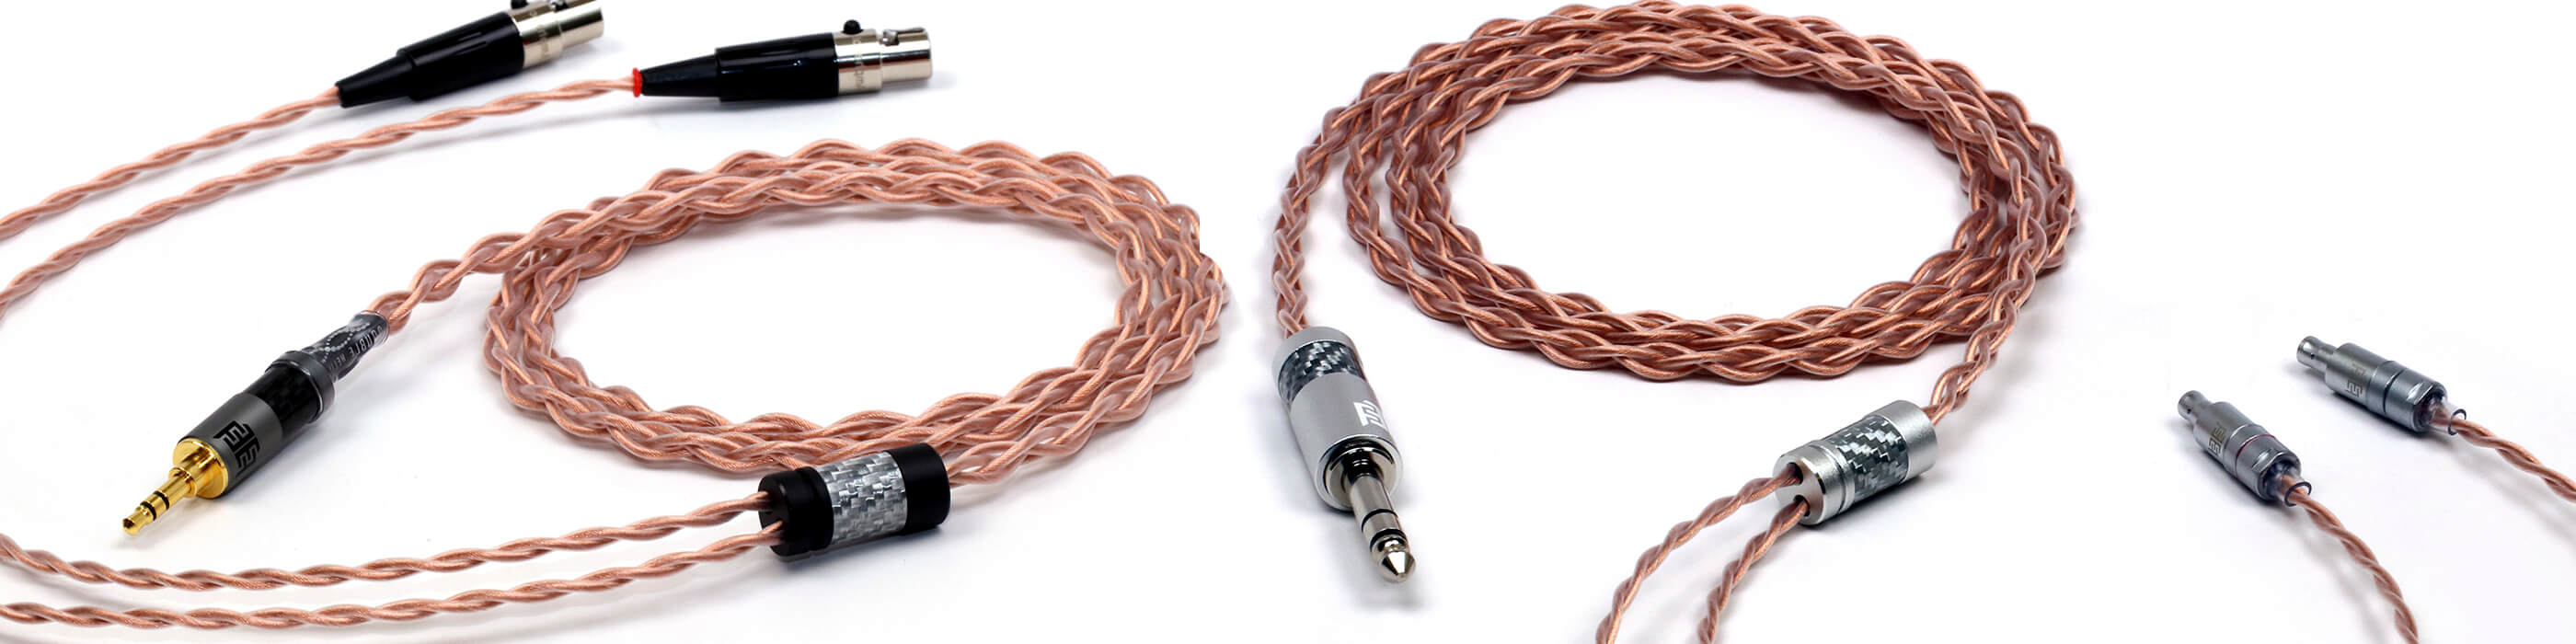 double-helix-cables-dhc-occ-litz-headphone-cable-eidolic-elite22-copper